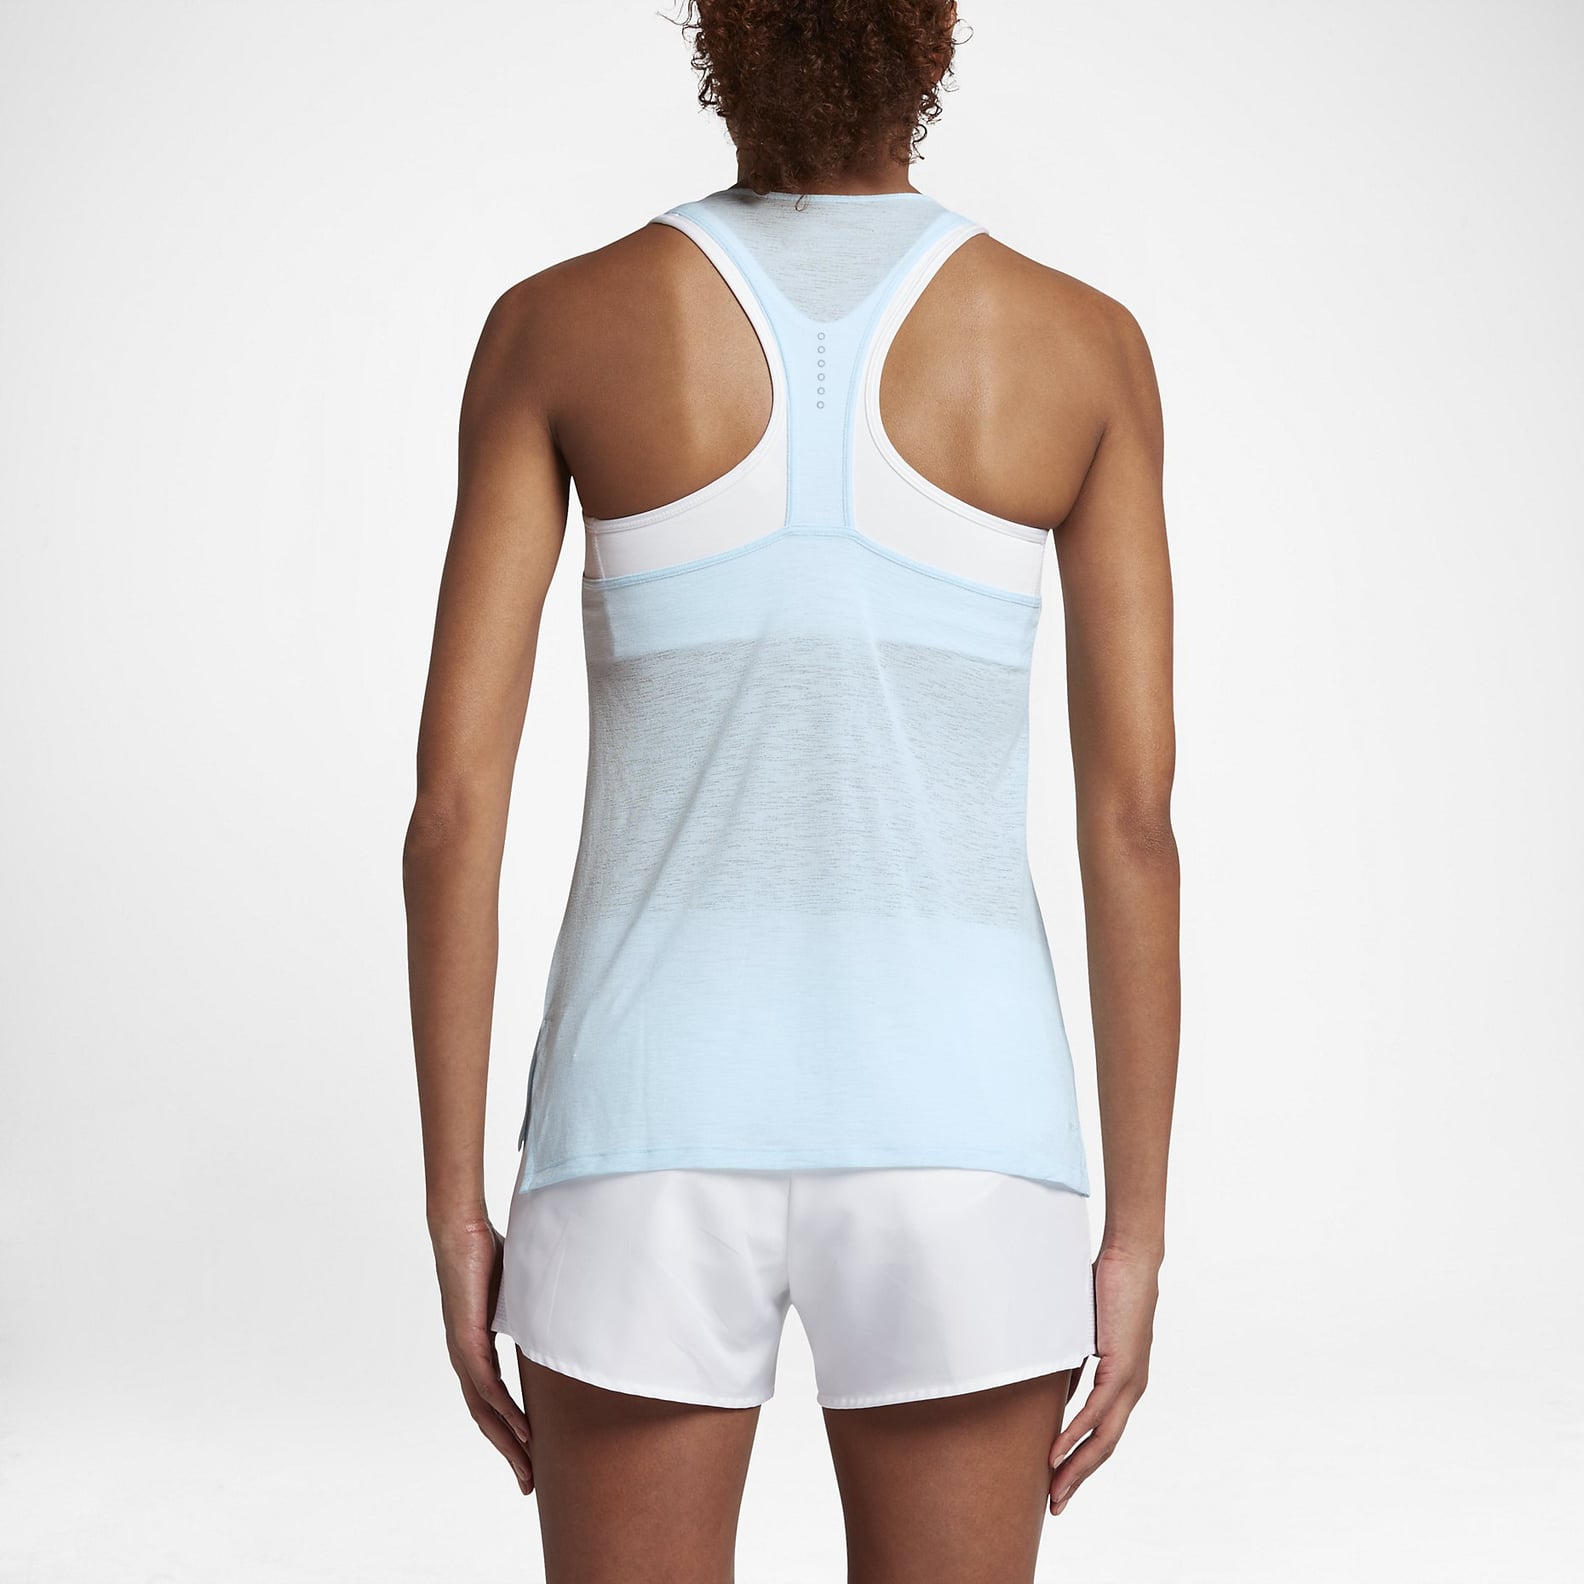 Nike Women's Products Under $40 | POPSUGAR Fitness